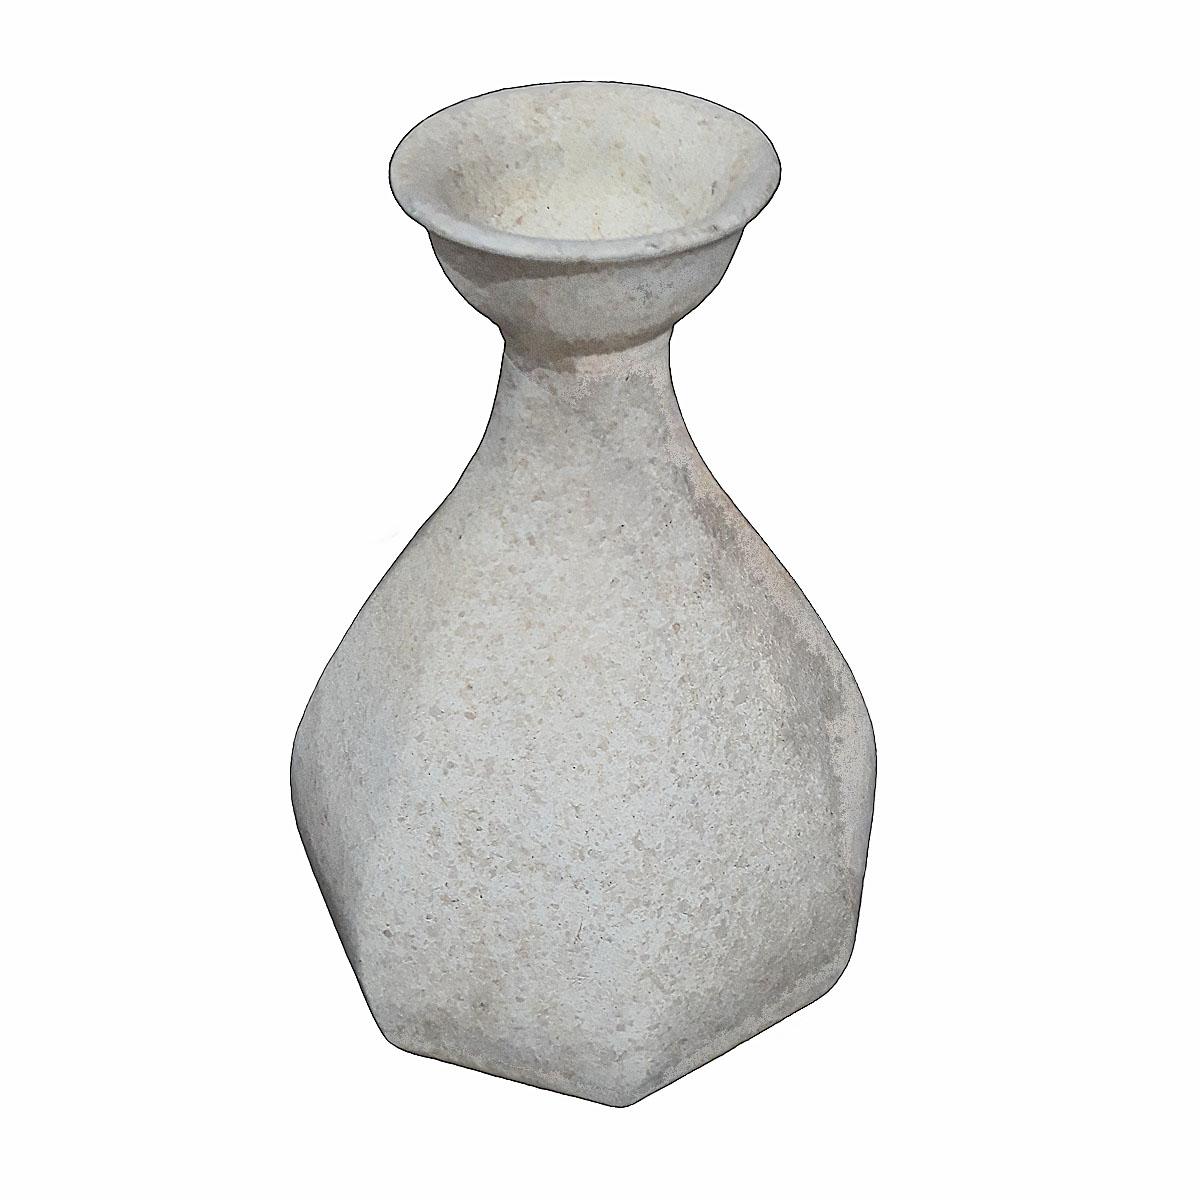 A white ceramic vase from Thailand, circa 1900. Rough glaze finish, narrow neck.